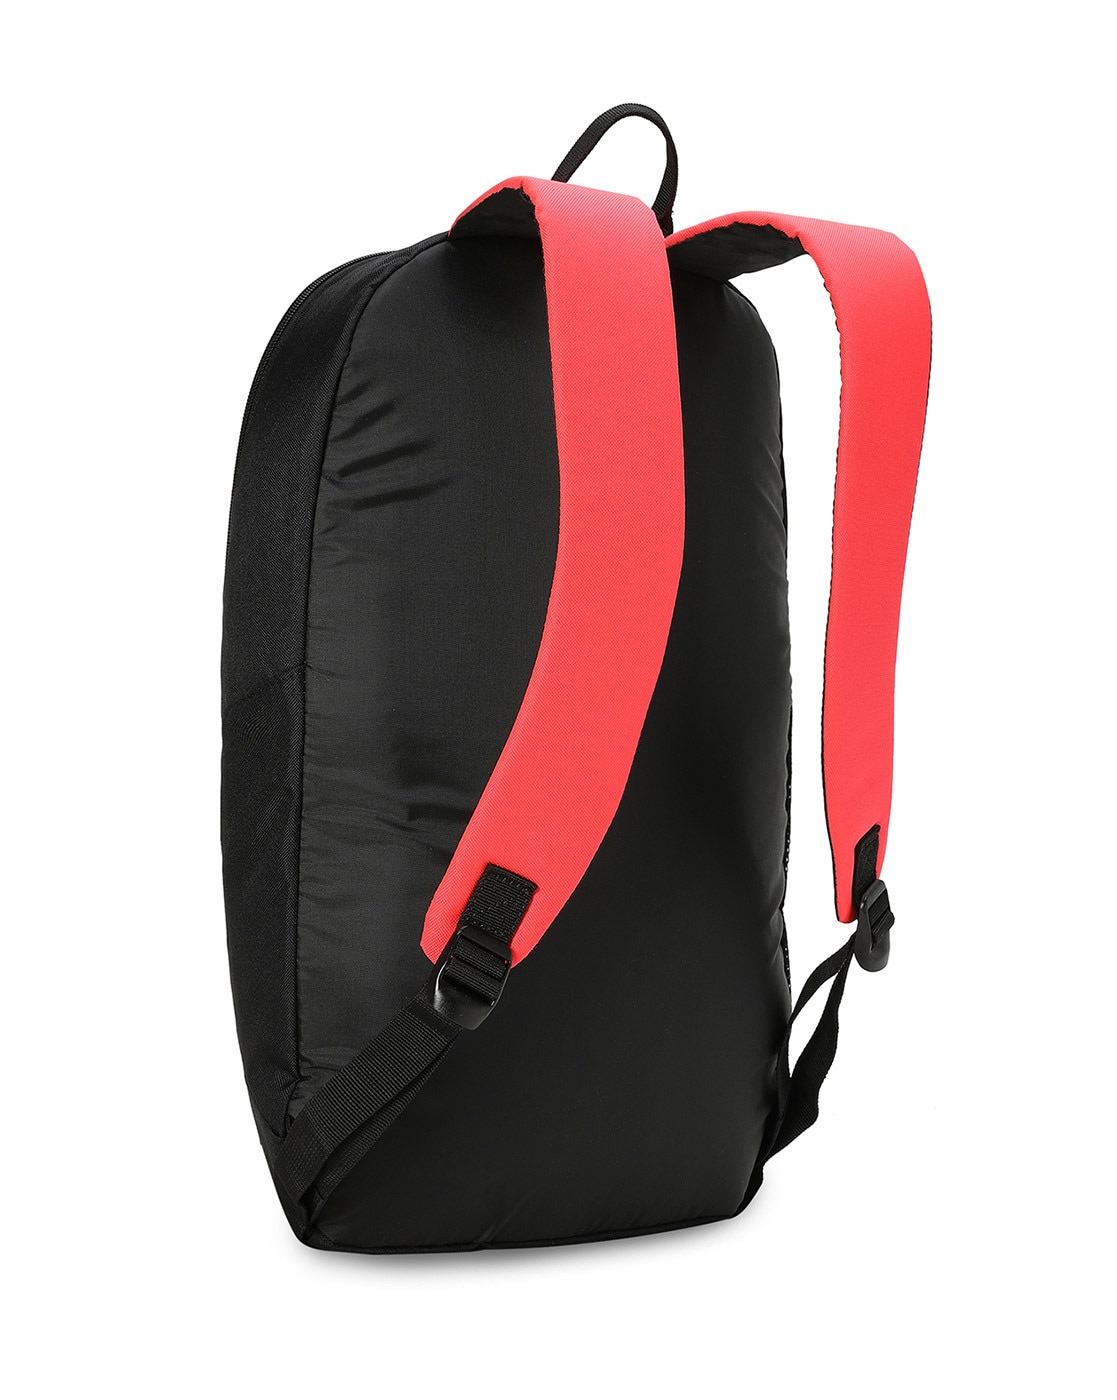 NewFeel Abeona 10L Backpack Pink : Amazon.in: Fashion